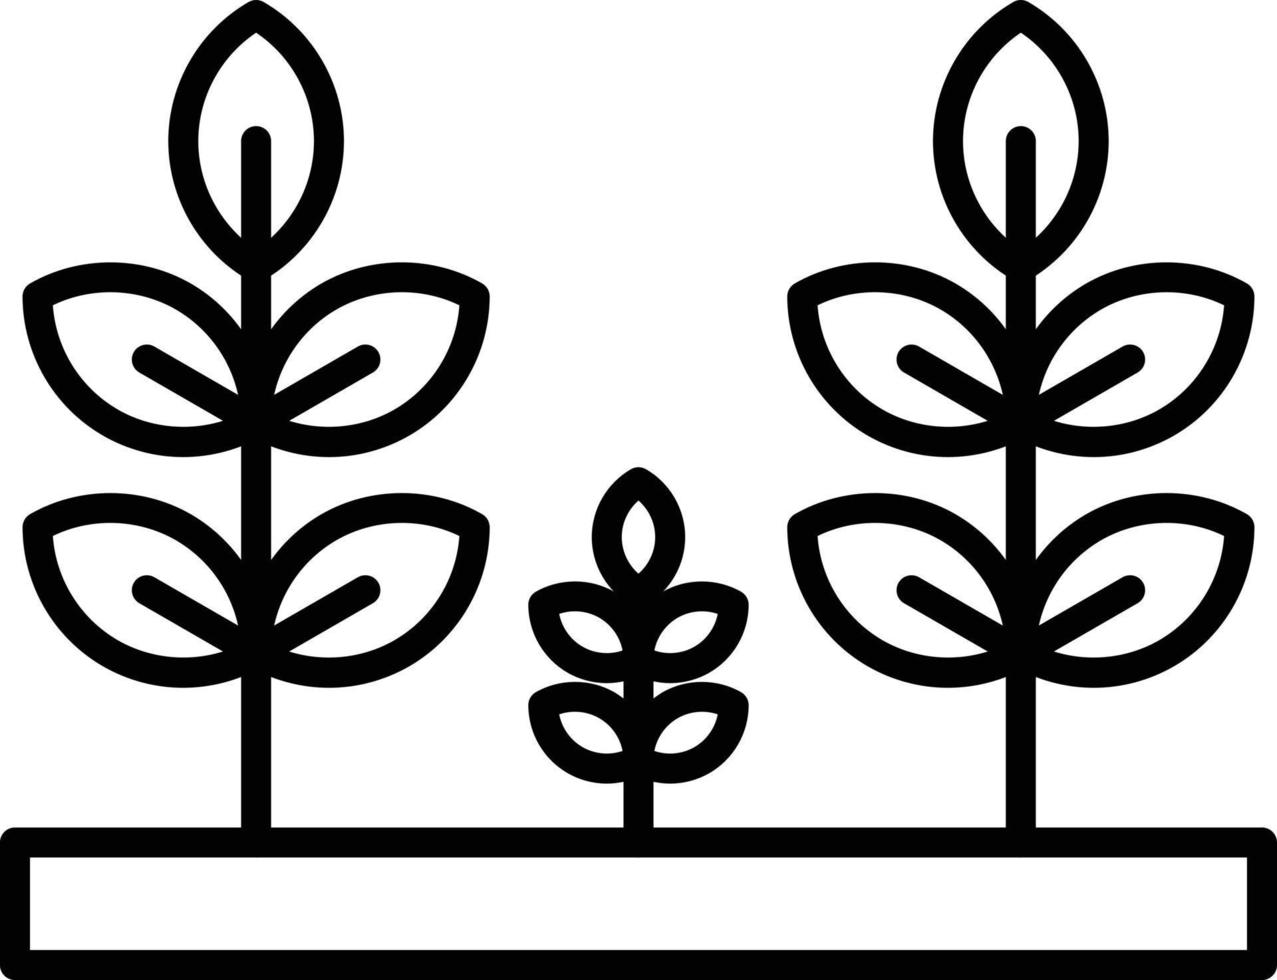 Plantation Outline Icon vector